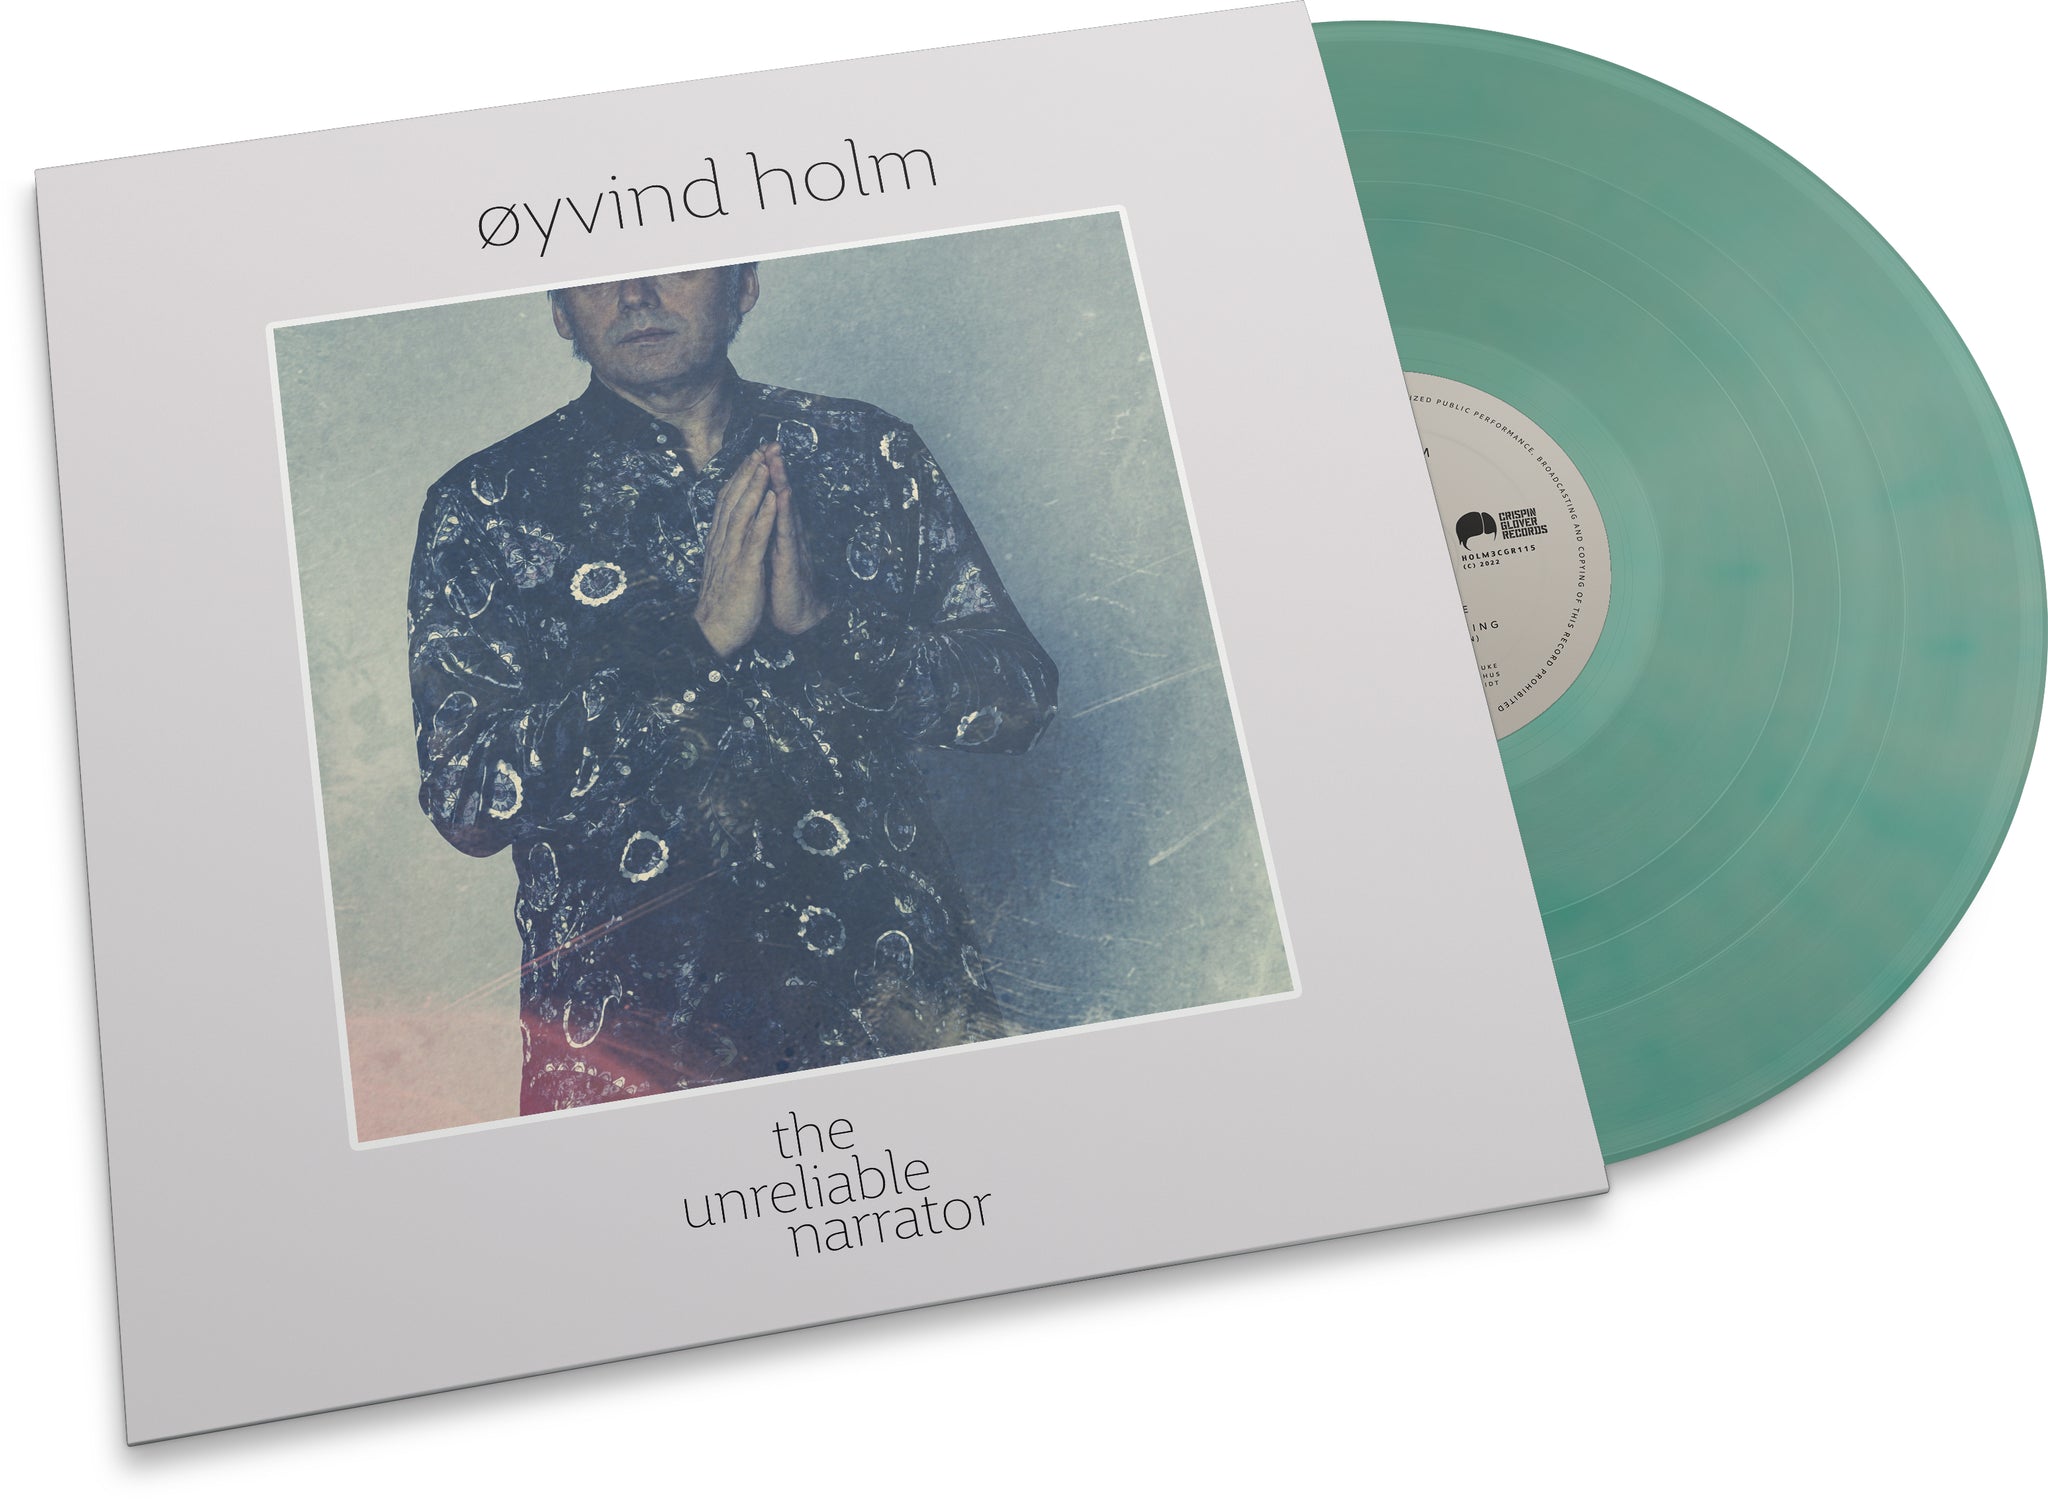 Øyvind Holm - "The Unreliable Narrator" (LTD 180G transparent vinyl with CD and Bonus 7")